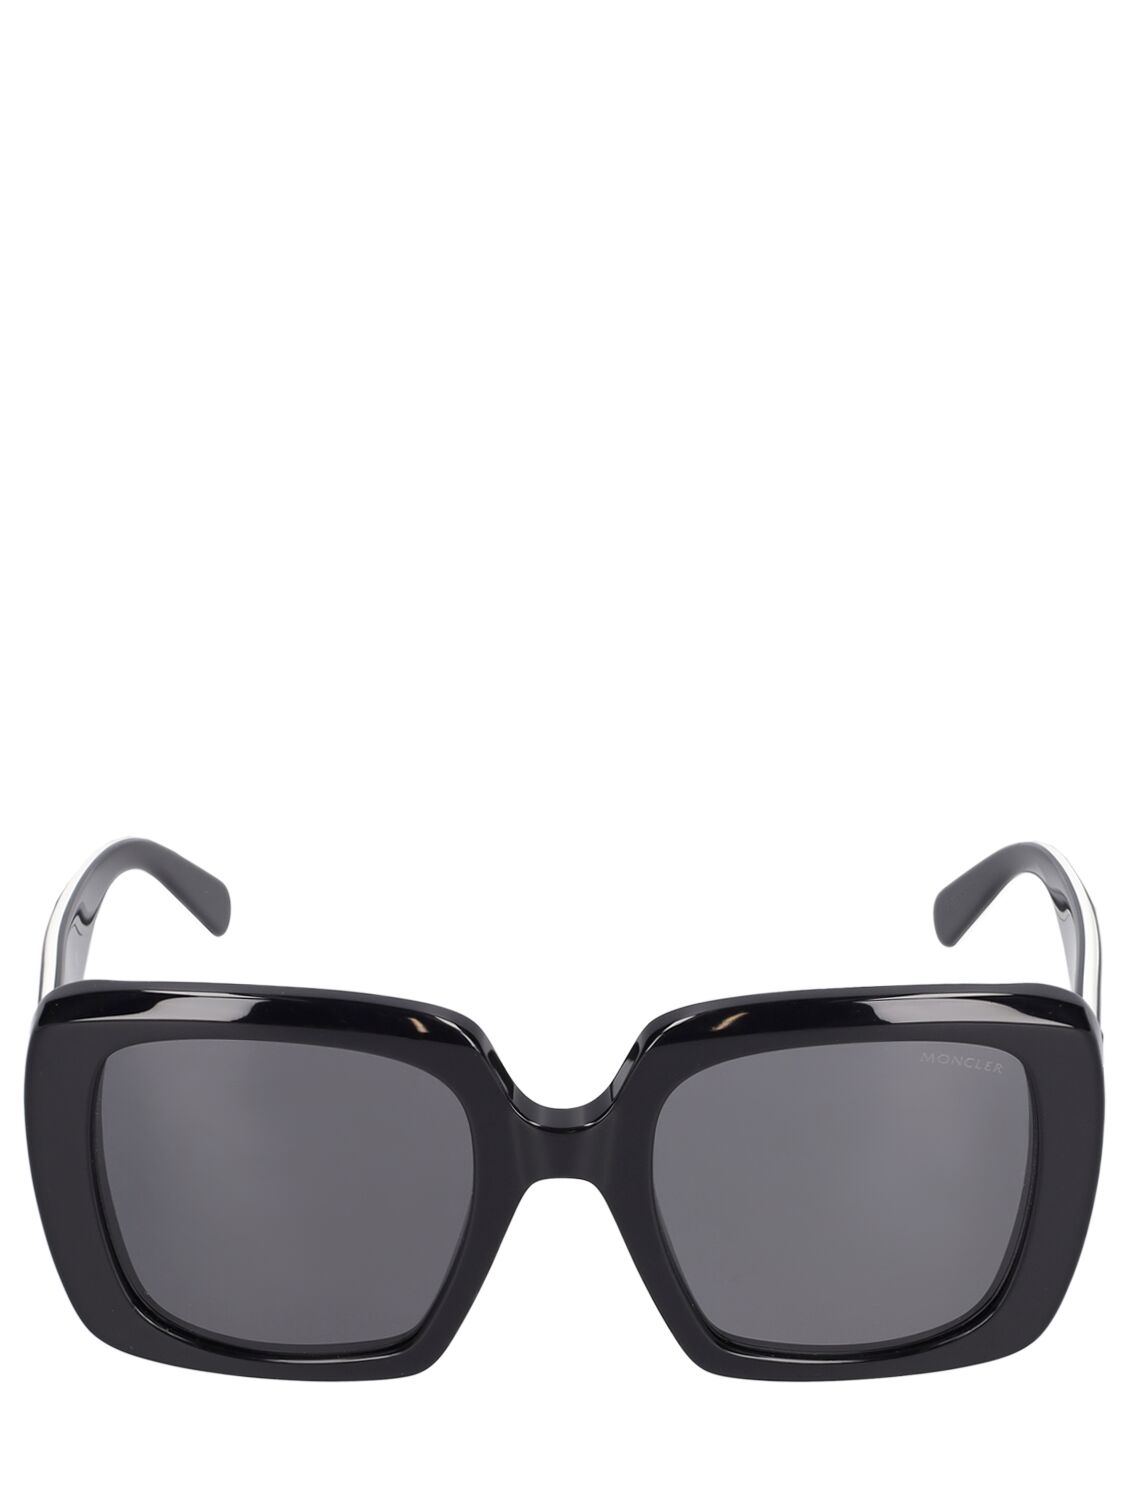 Image of Blanche Squared Acetate Sunglasses